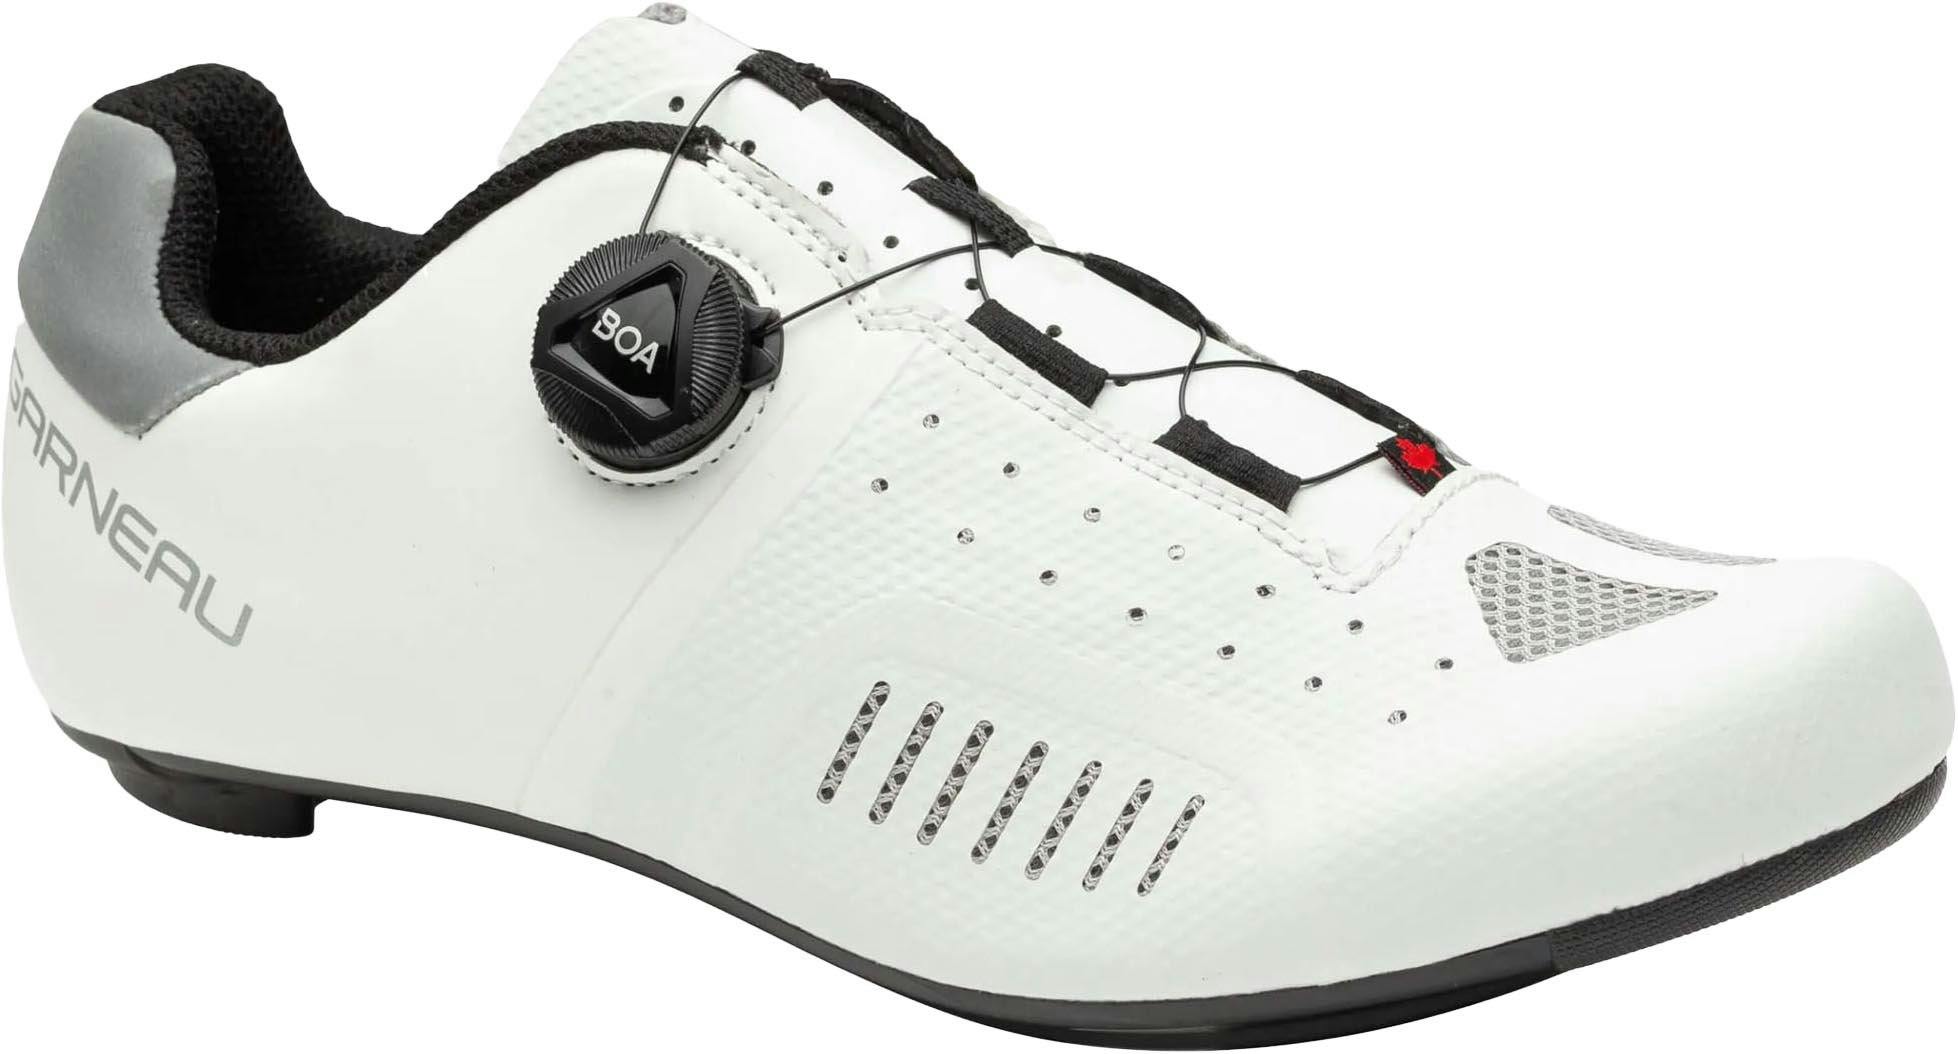 Product image for Copal BOA Shoes - Unisex